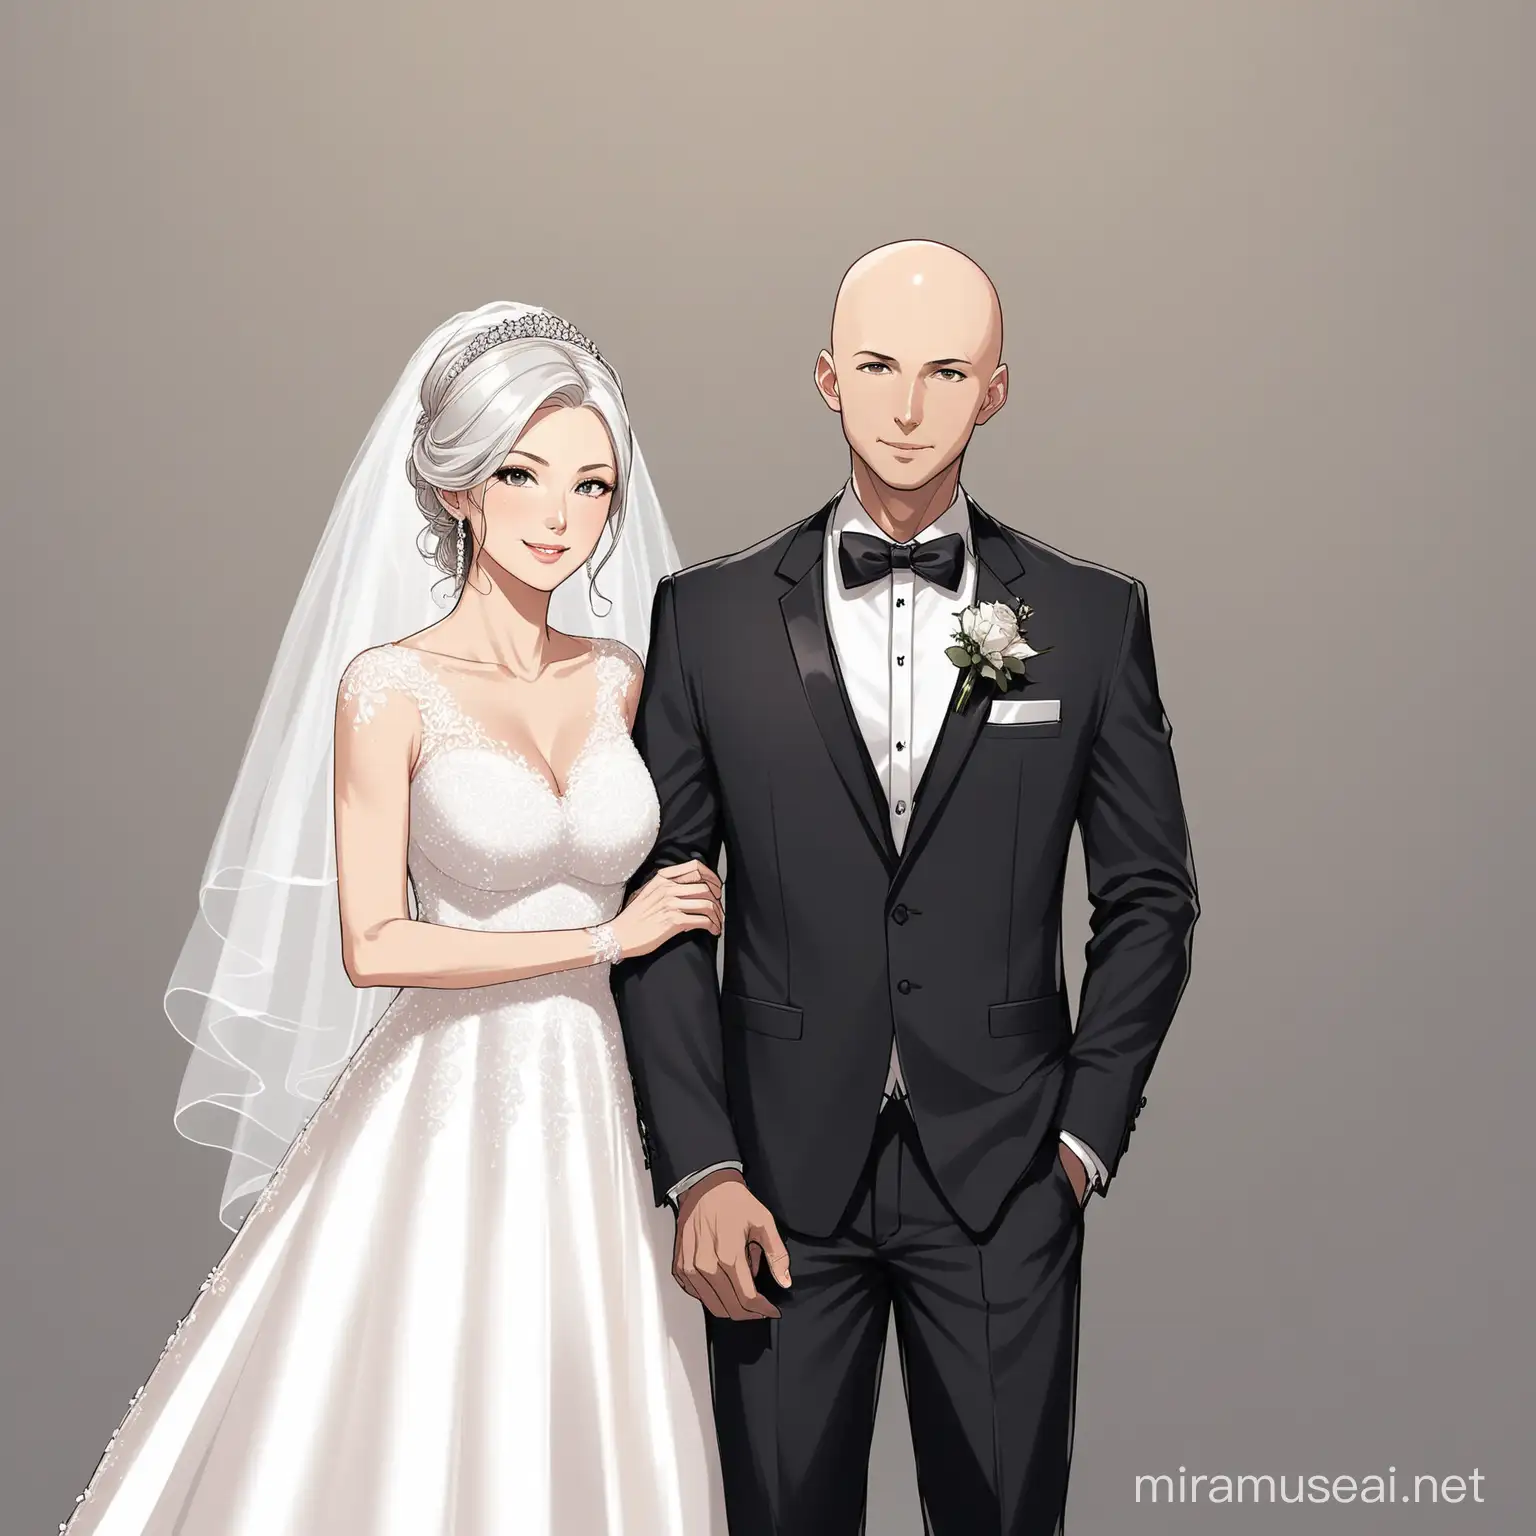 Elegant Mature Bride and Groom Exchange Vows in Timeless Wedding Attire